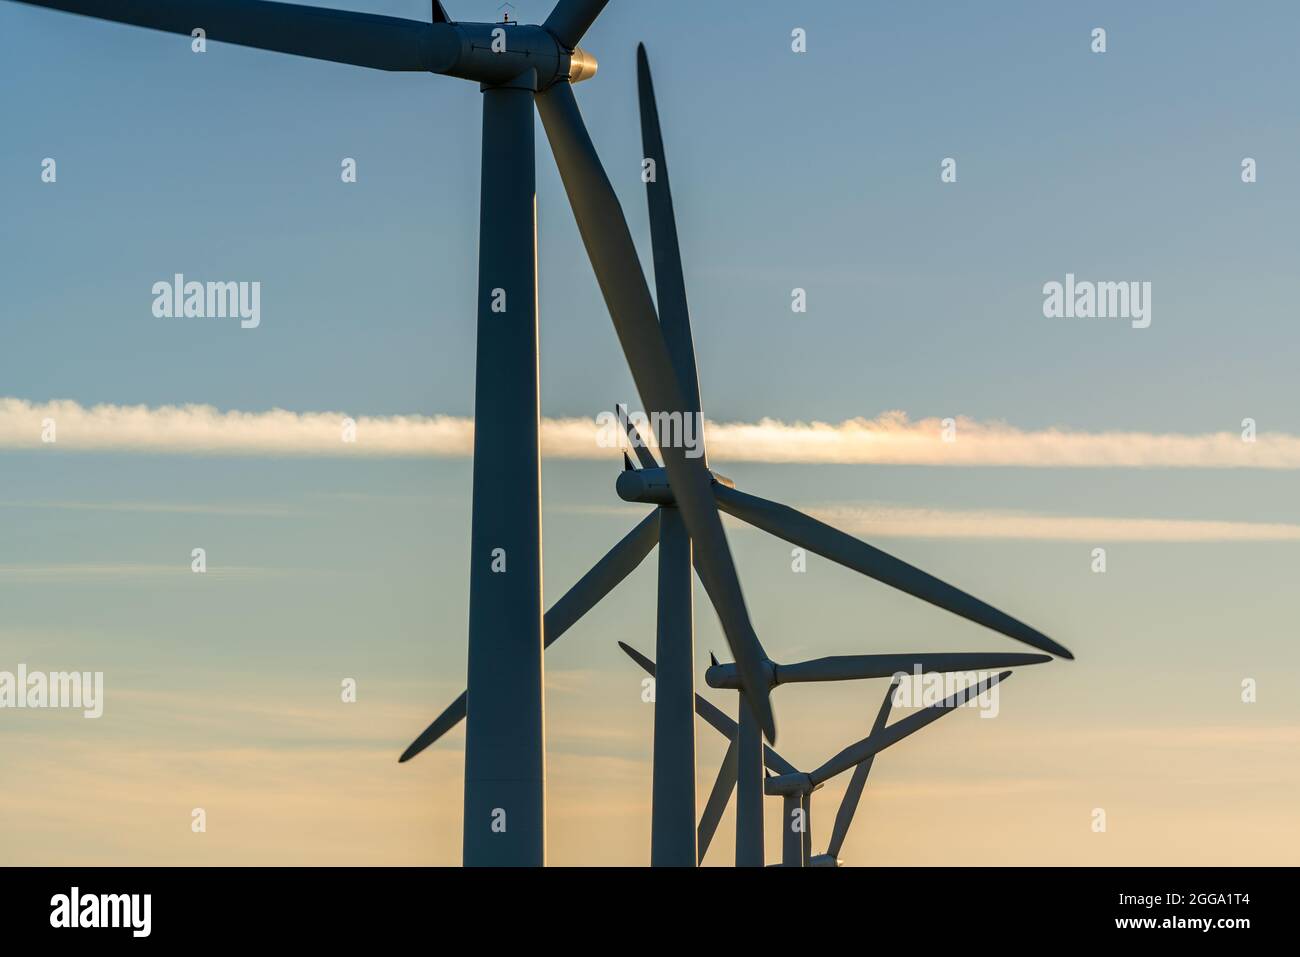 Wind turbine energy generaters on wind farm Stock Photo